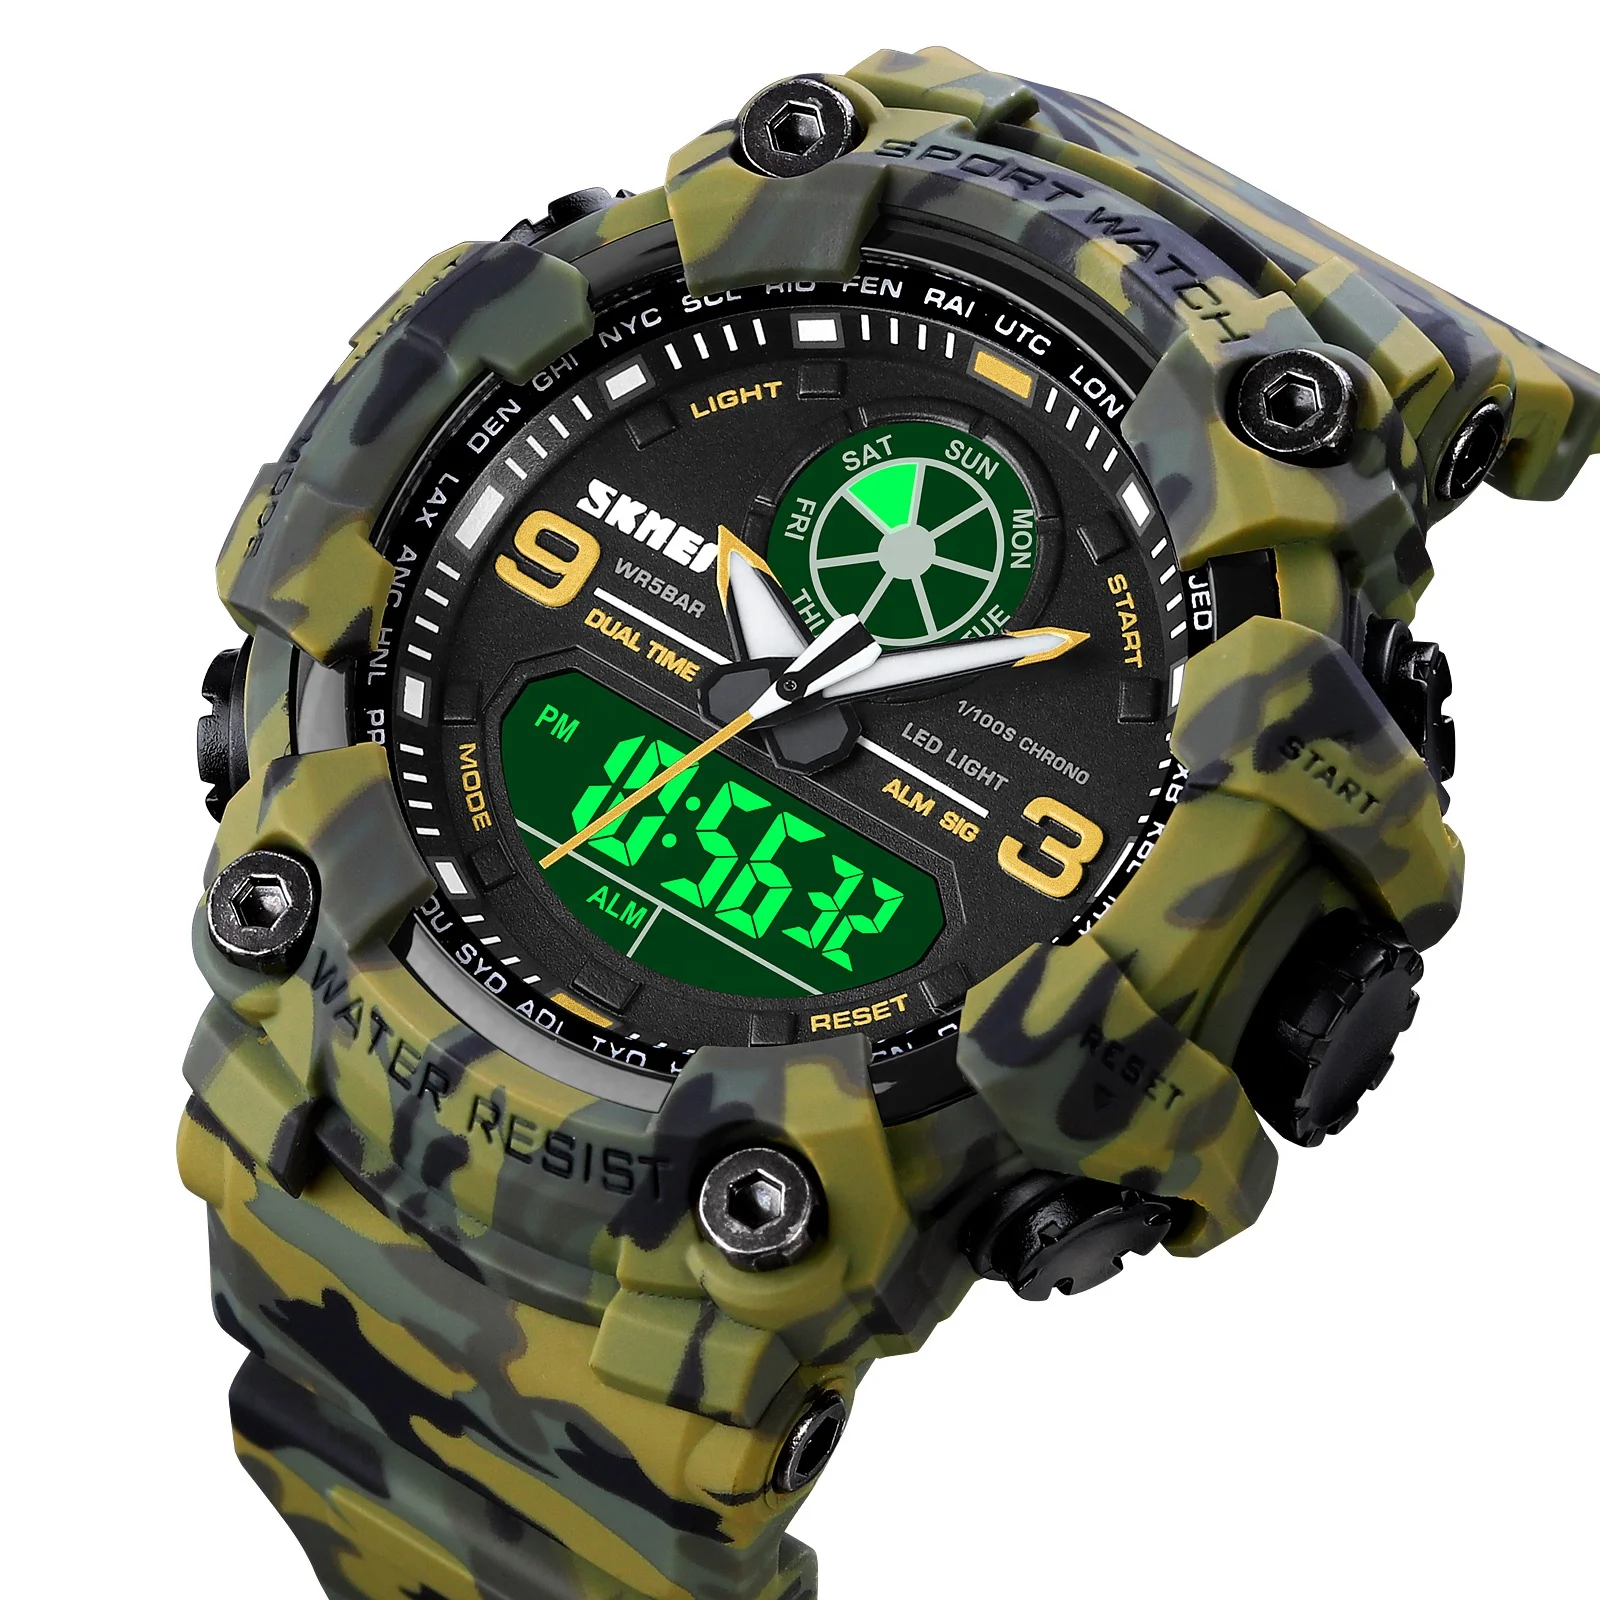 

SKMEI 1818 Waterproof 5ATM Analogue Watch Reloj Mens Watch Luxury Shock Automatic Sport LED Digital Wristwatches Relogio, Black,red,blue,army green camo